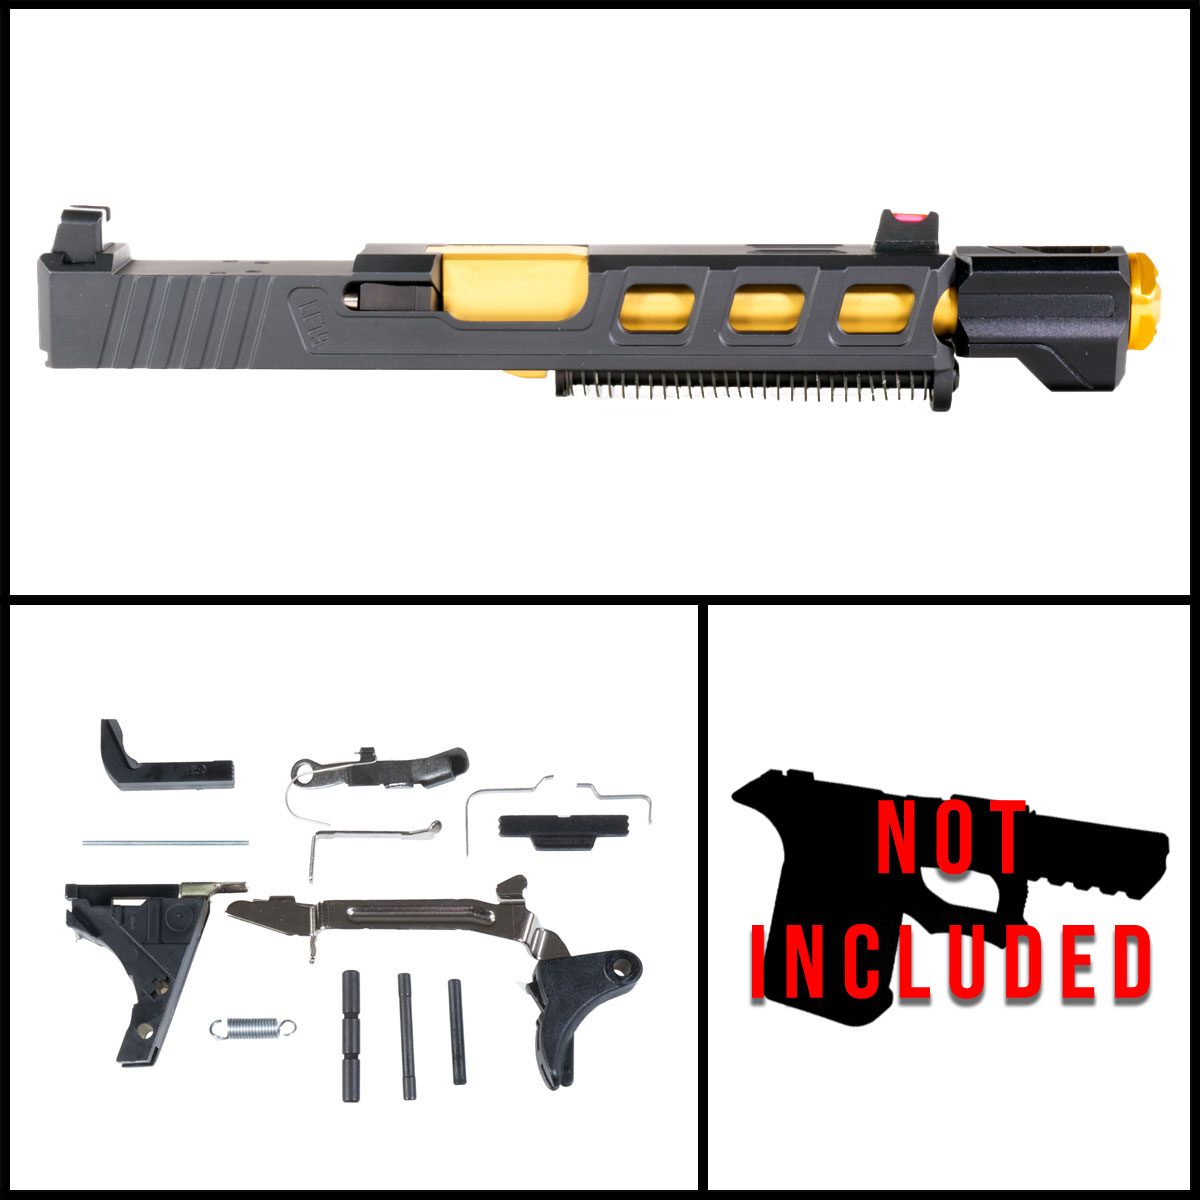 DD 'Peng w/ Tyrant Designs Compensator' 9mm Full Pistol Build Kit (Everything Minus Frame) - Glock 19 Gen 1-3 Compatible